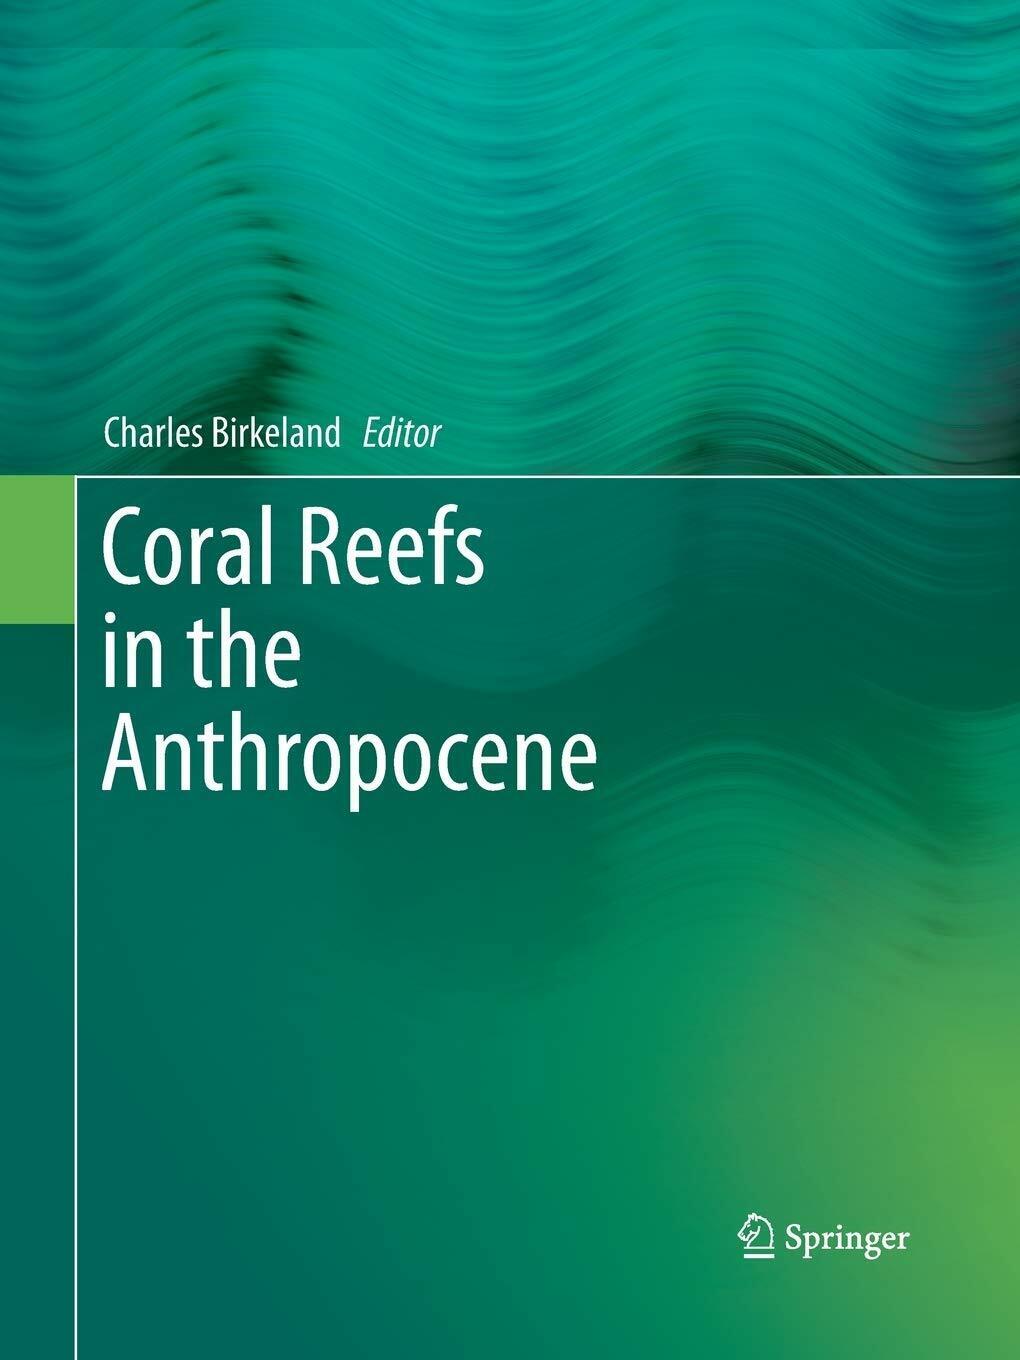 Coral Reefs in the Anthropocene - Charles Birkeland - Springer, 2016